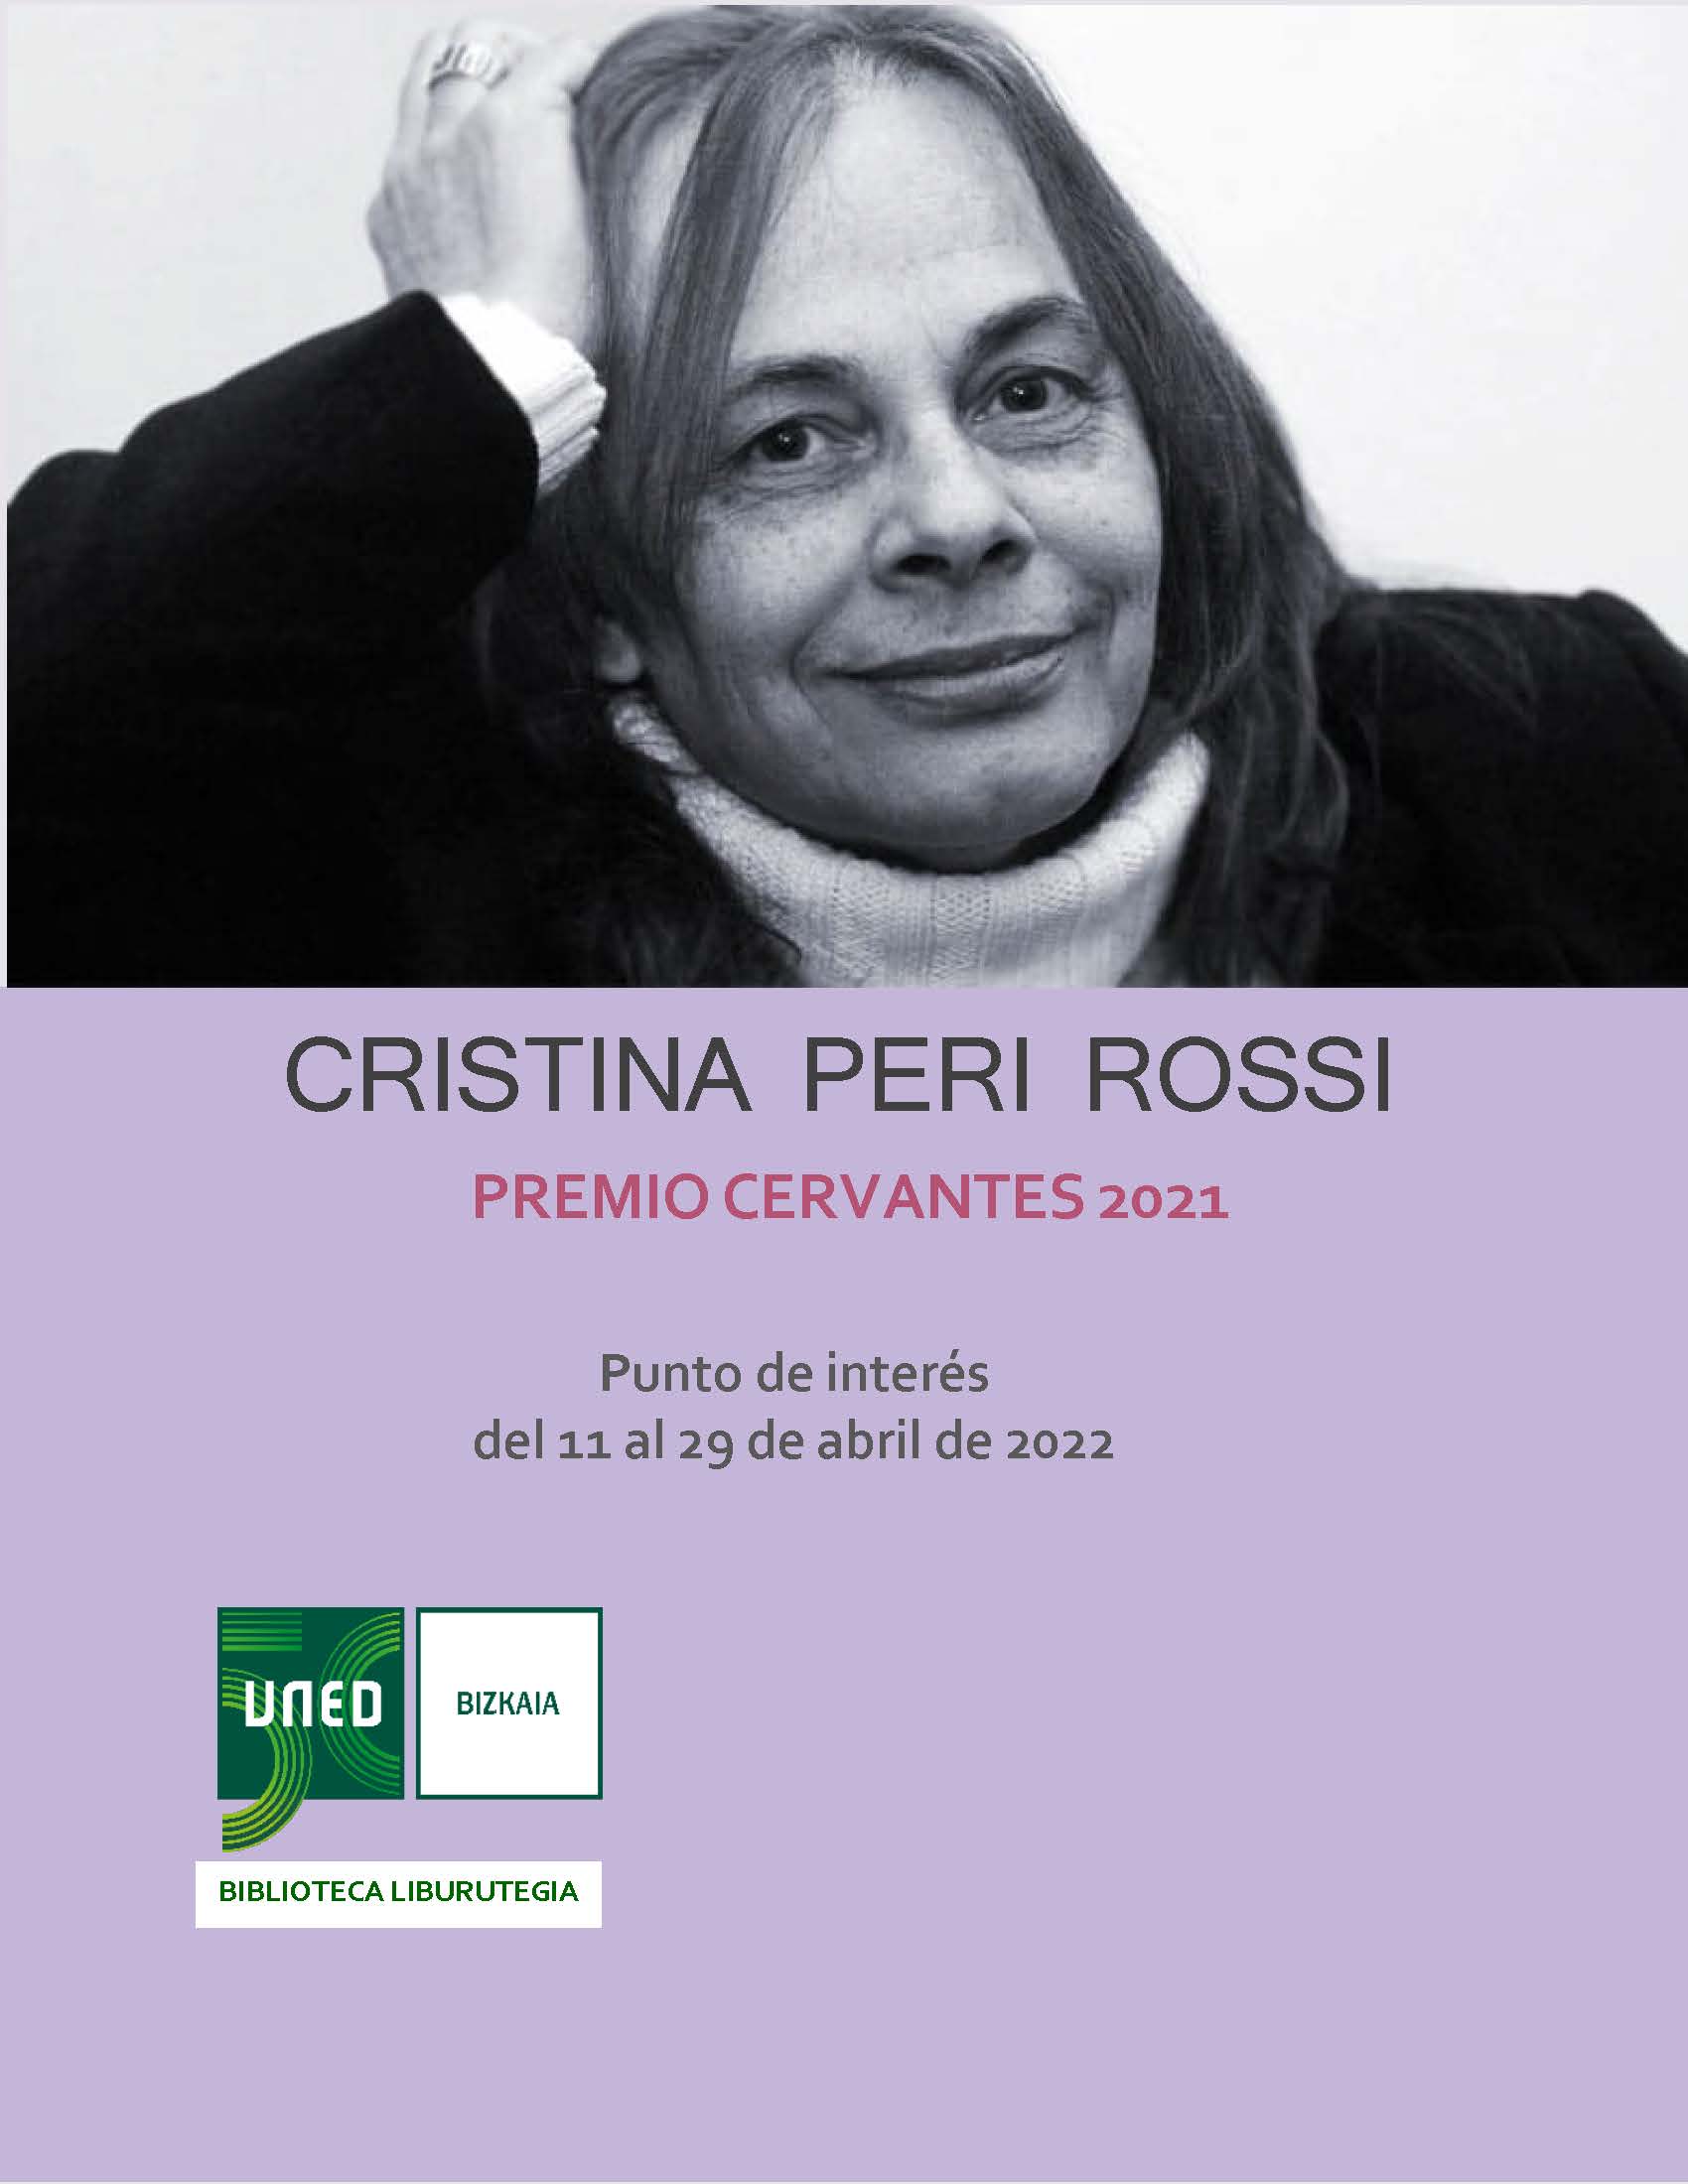 Cristina Peri Rossi